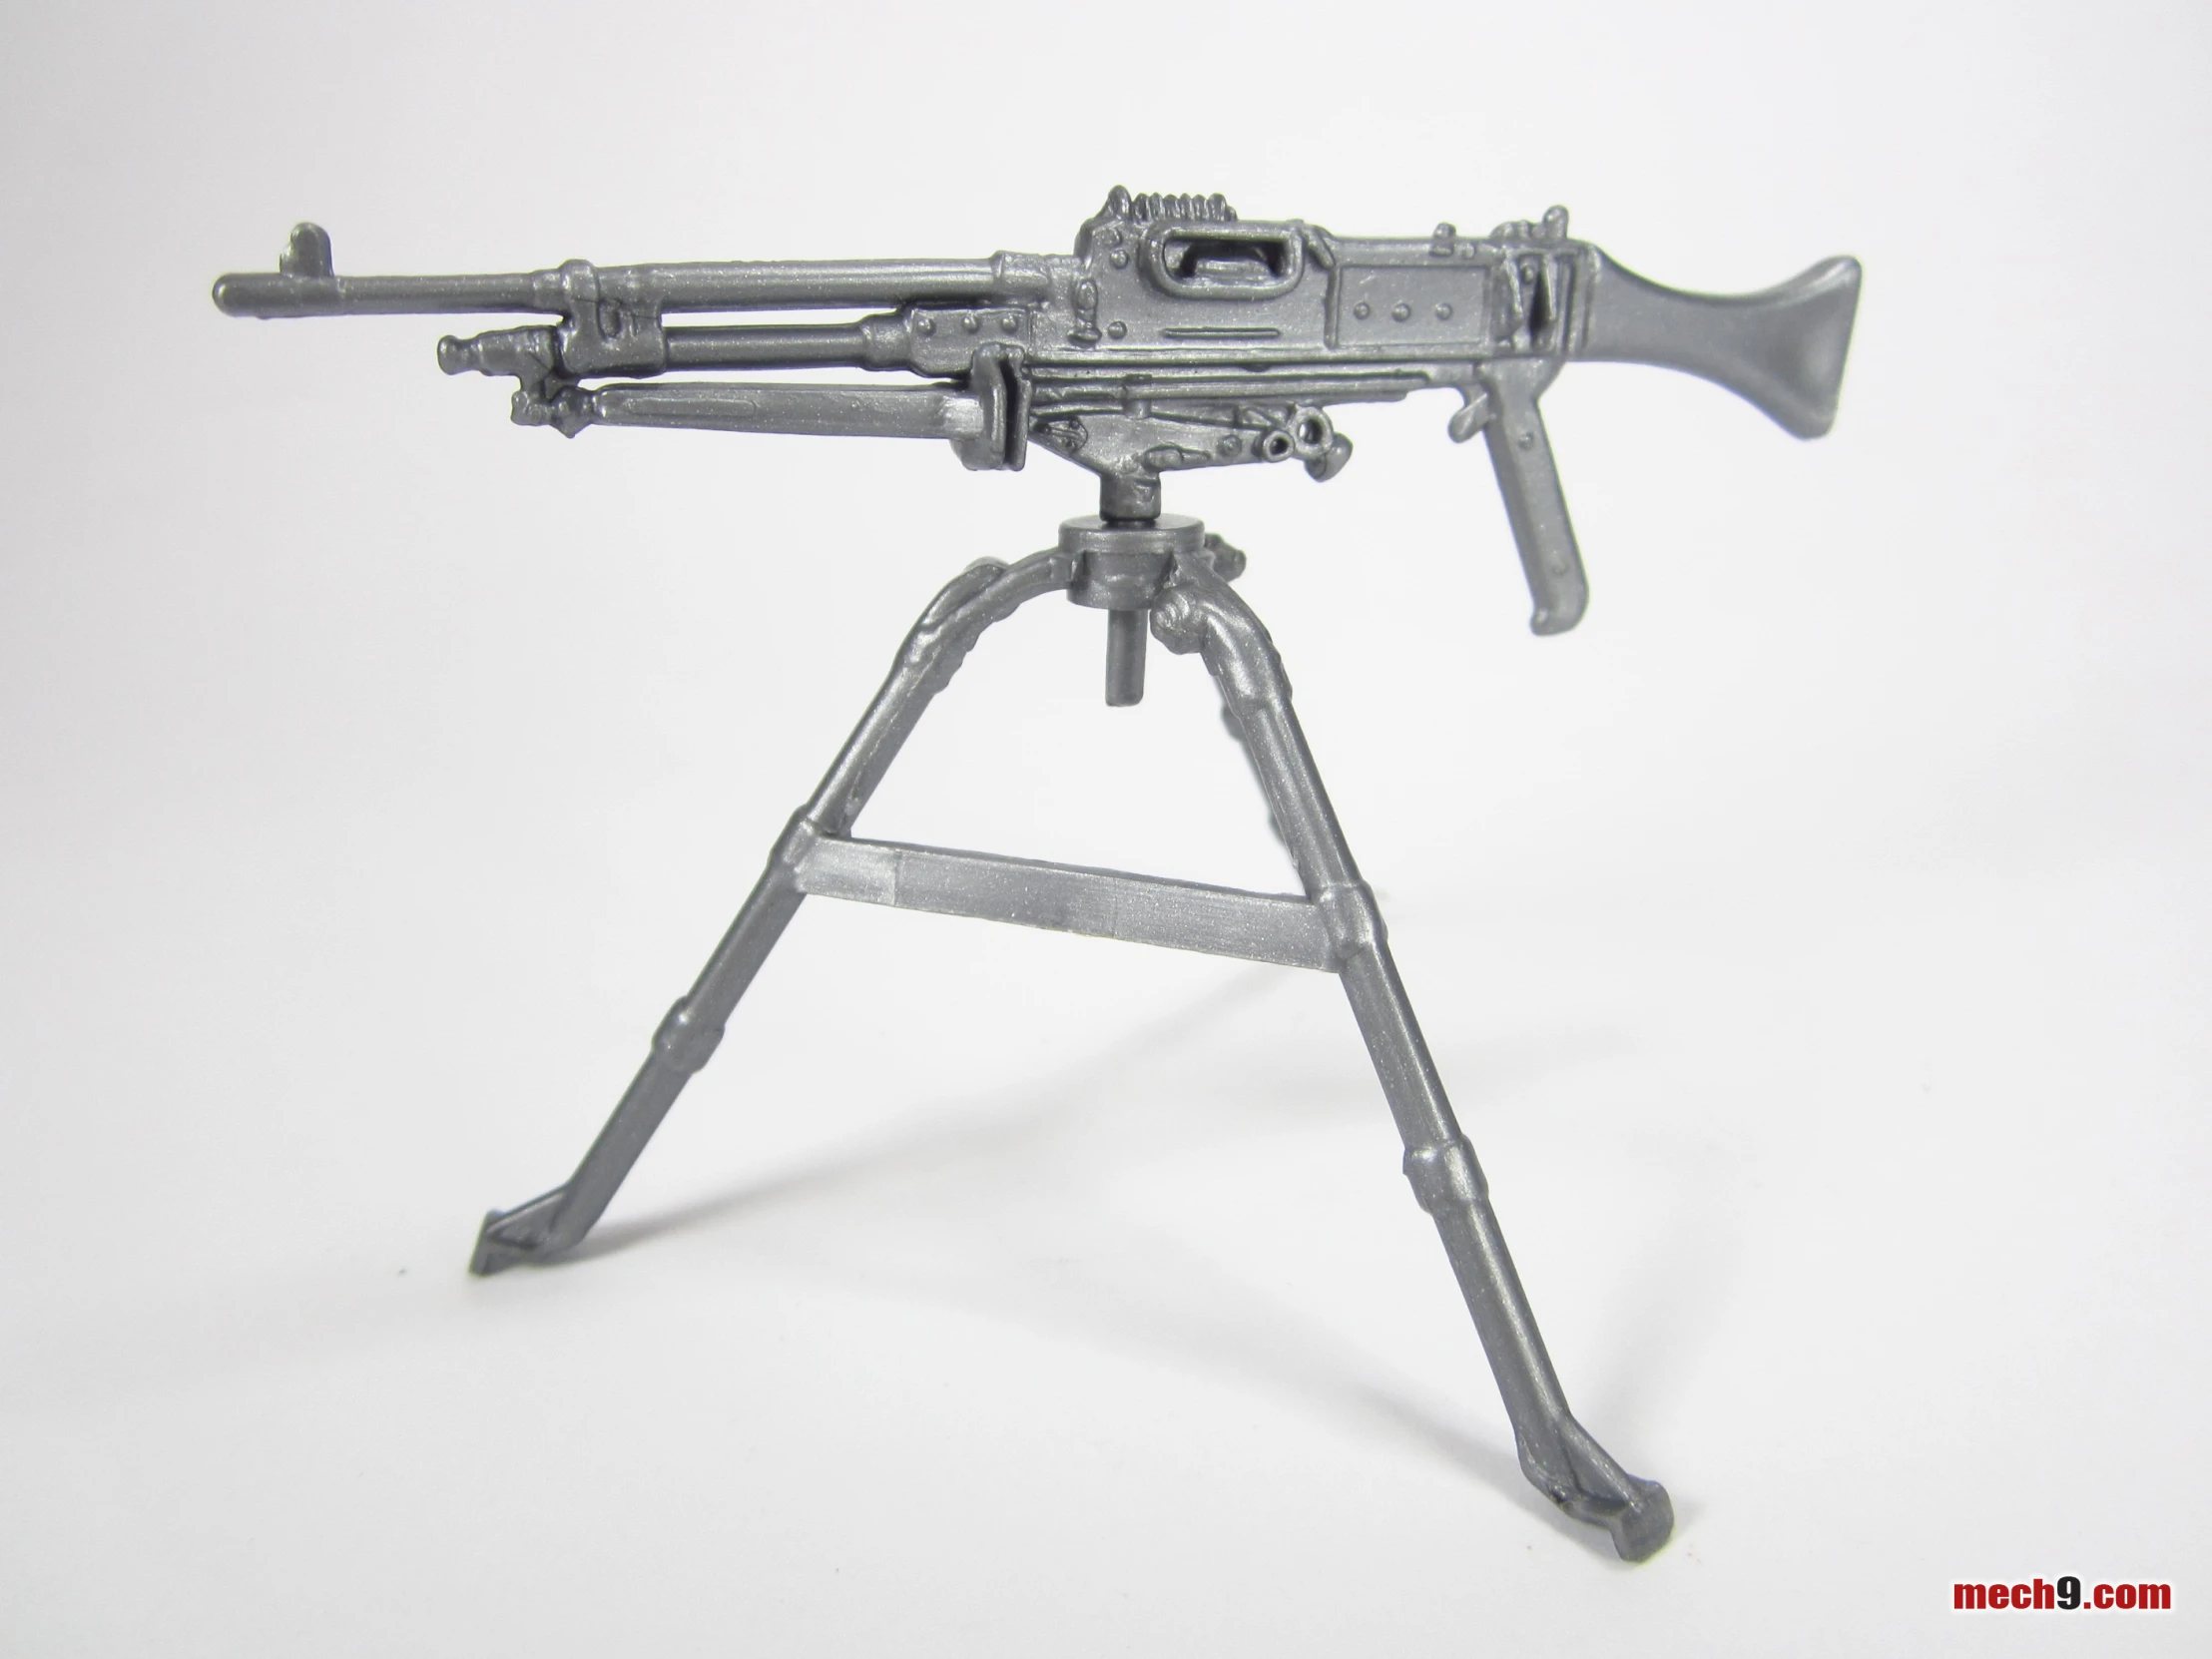 a metal model of an ak 47 in the shape of a gun